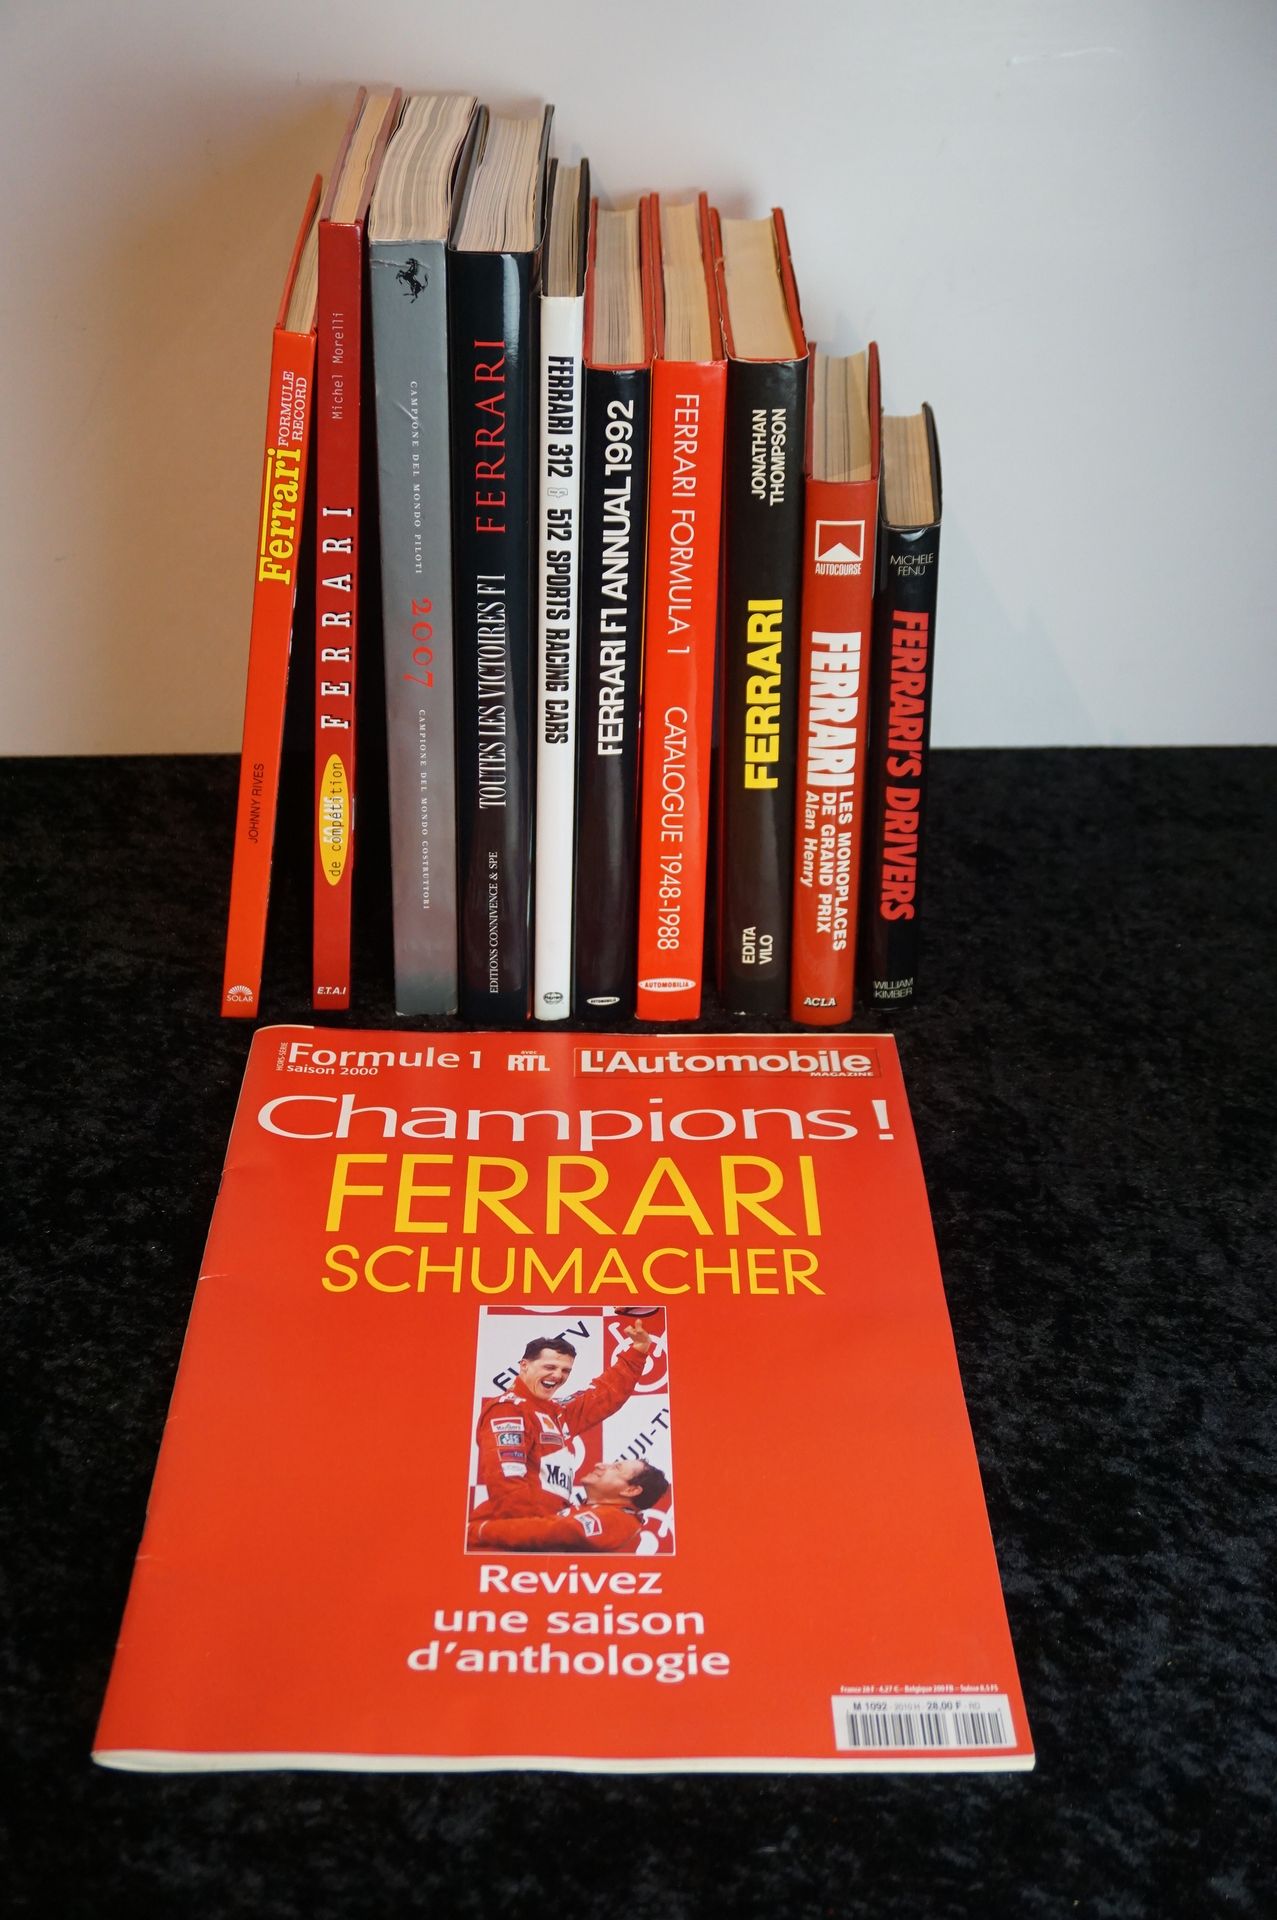 Null Books Ferrari F1
- Champions! Ferrari Schumacher : L'Automobile magazine
- &hellip;